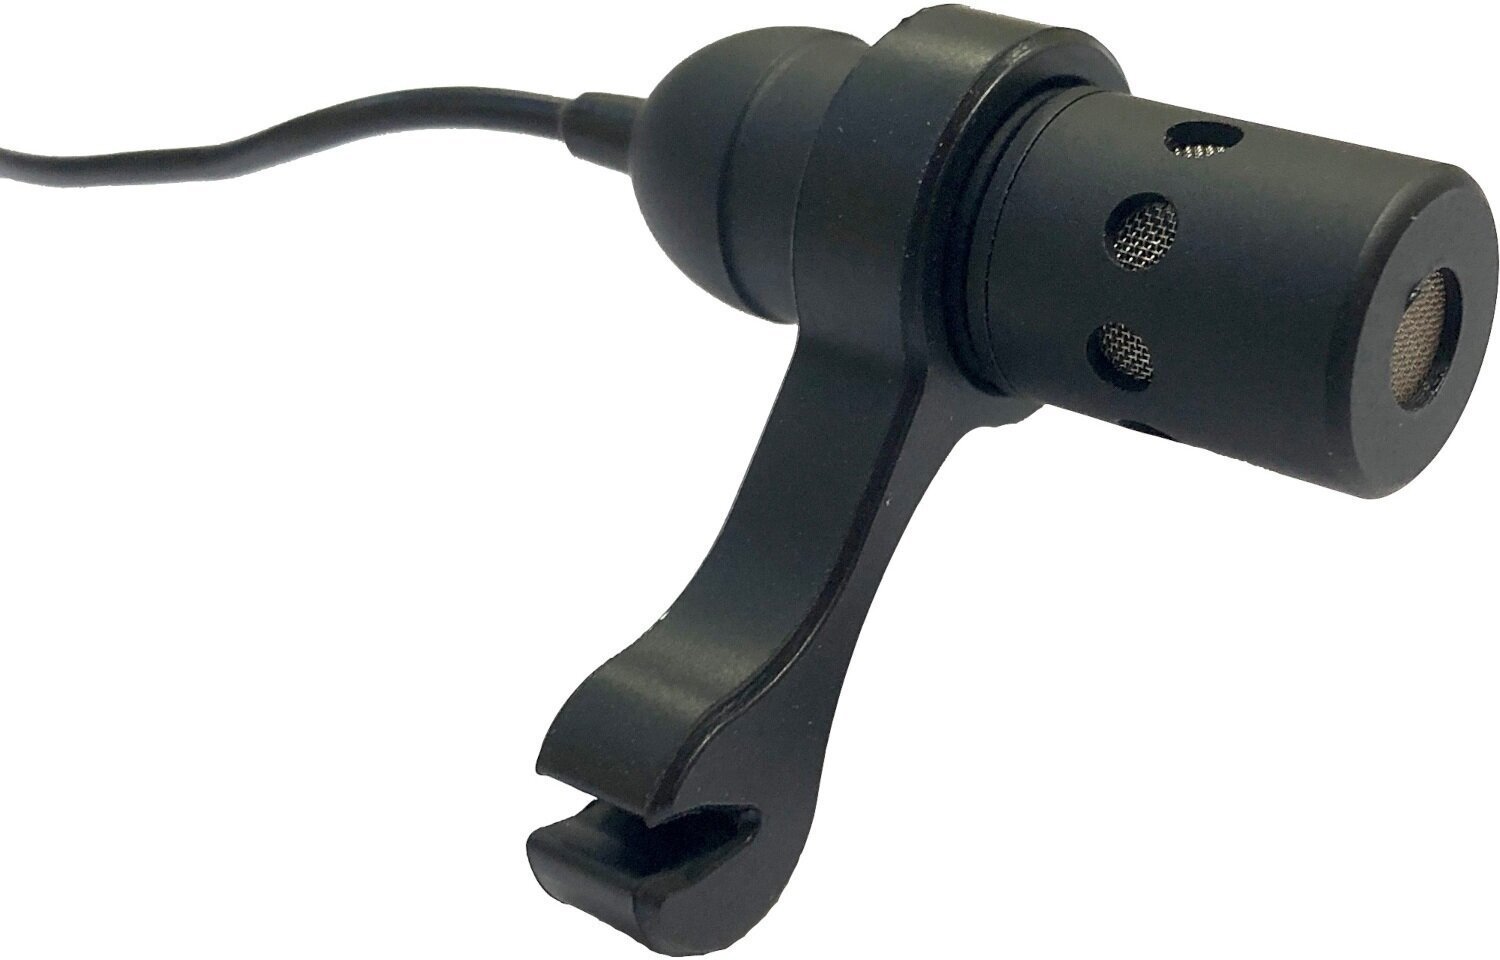 Instrument-kondensator mikrofon Prodipe PROVL21CARDIO Instrument-kondensator mikrofon